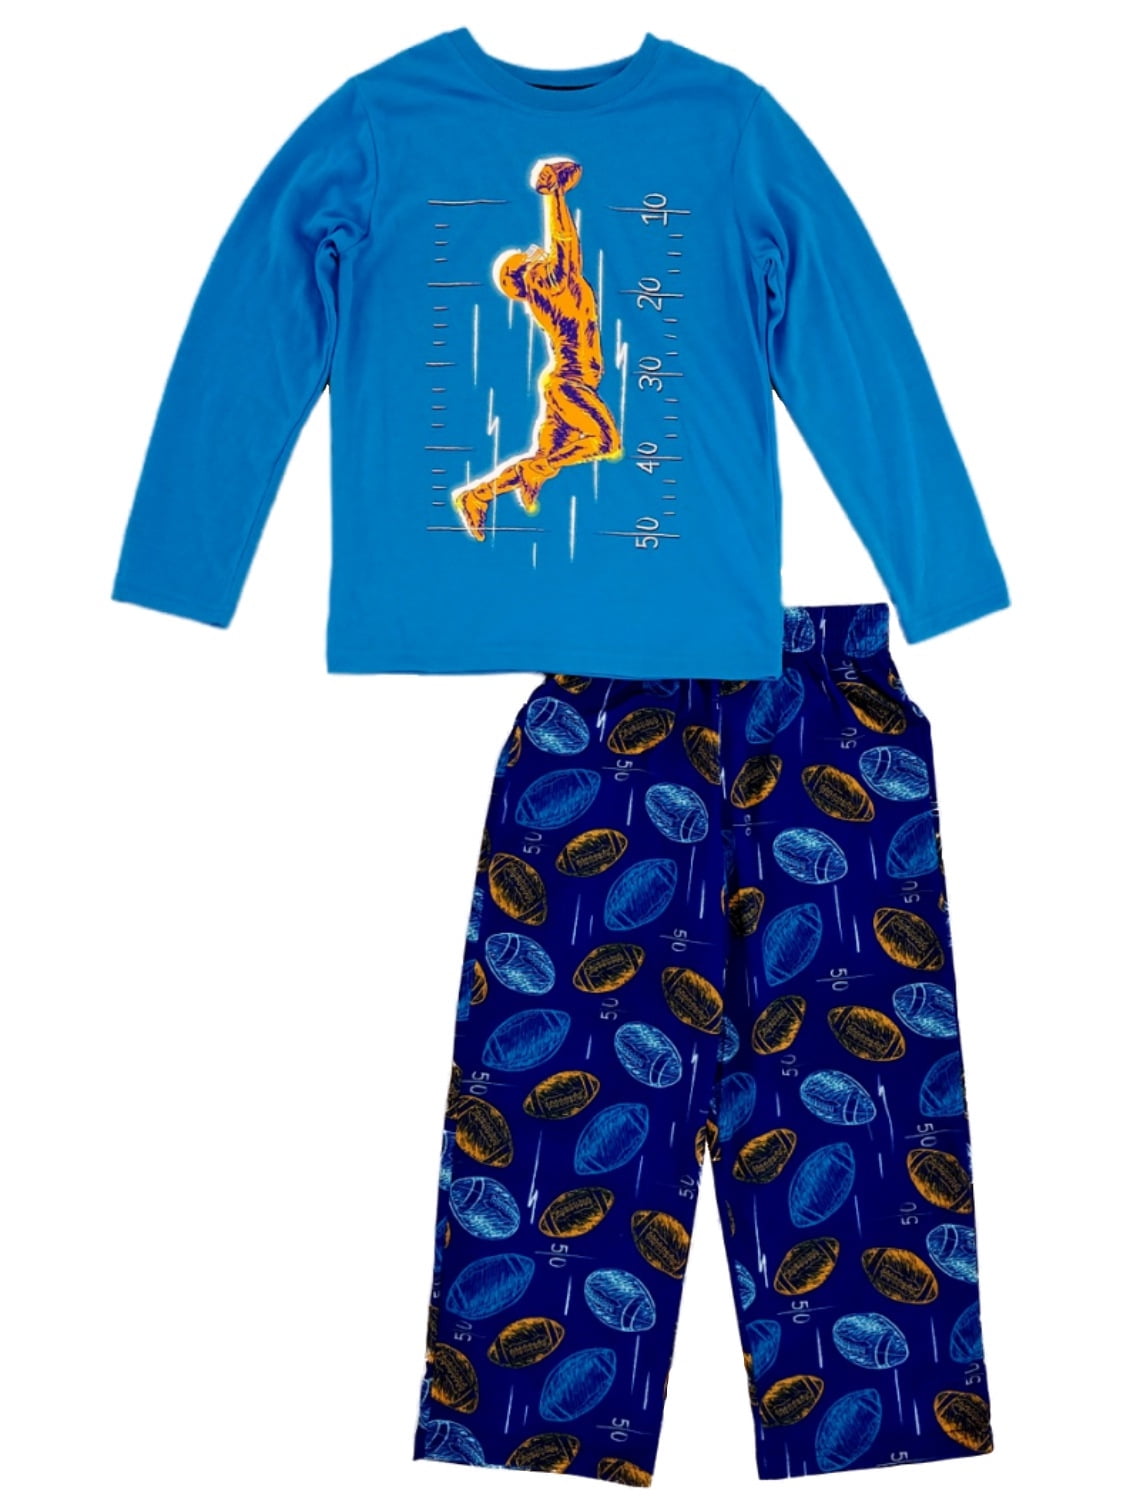 Jelli Fish Boys L 10 12 Fleece Pajamas PJs Jellifish Football Soccer Basketball 